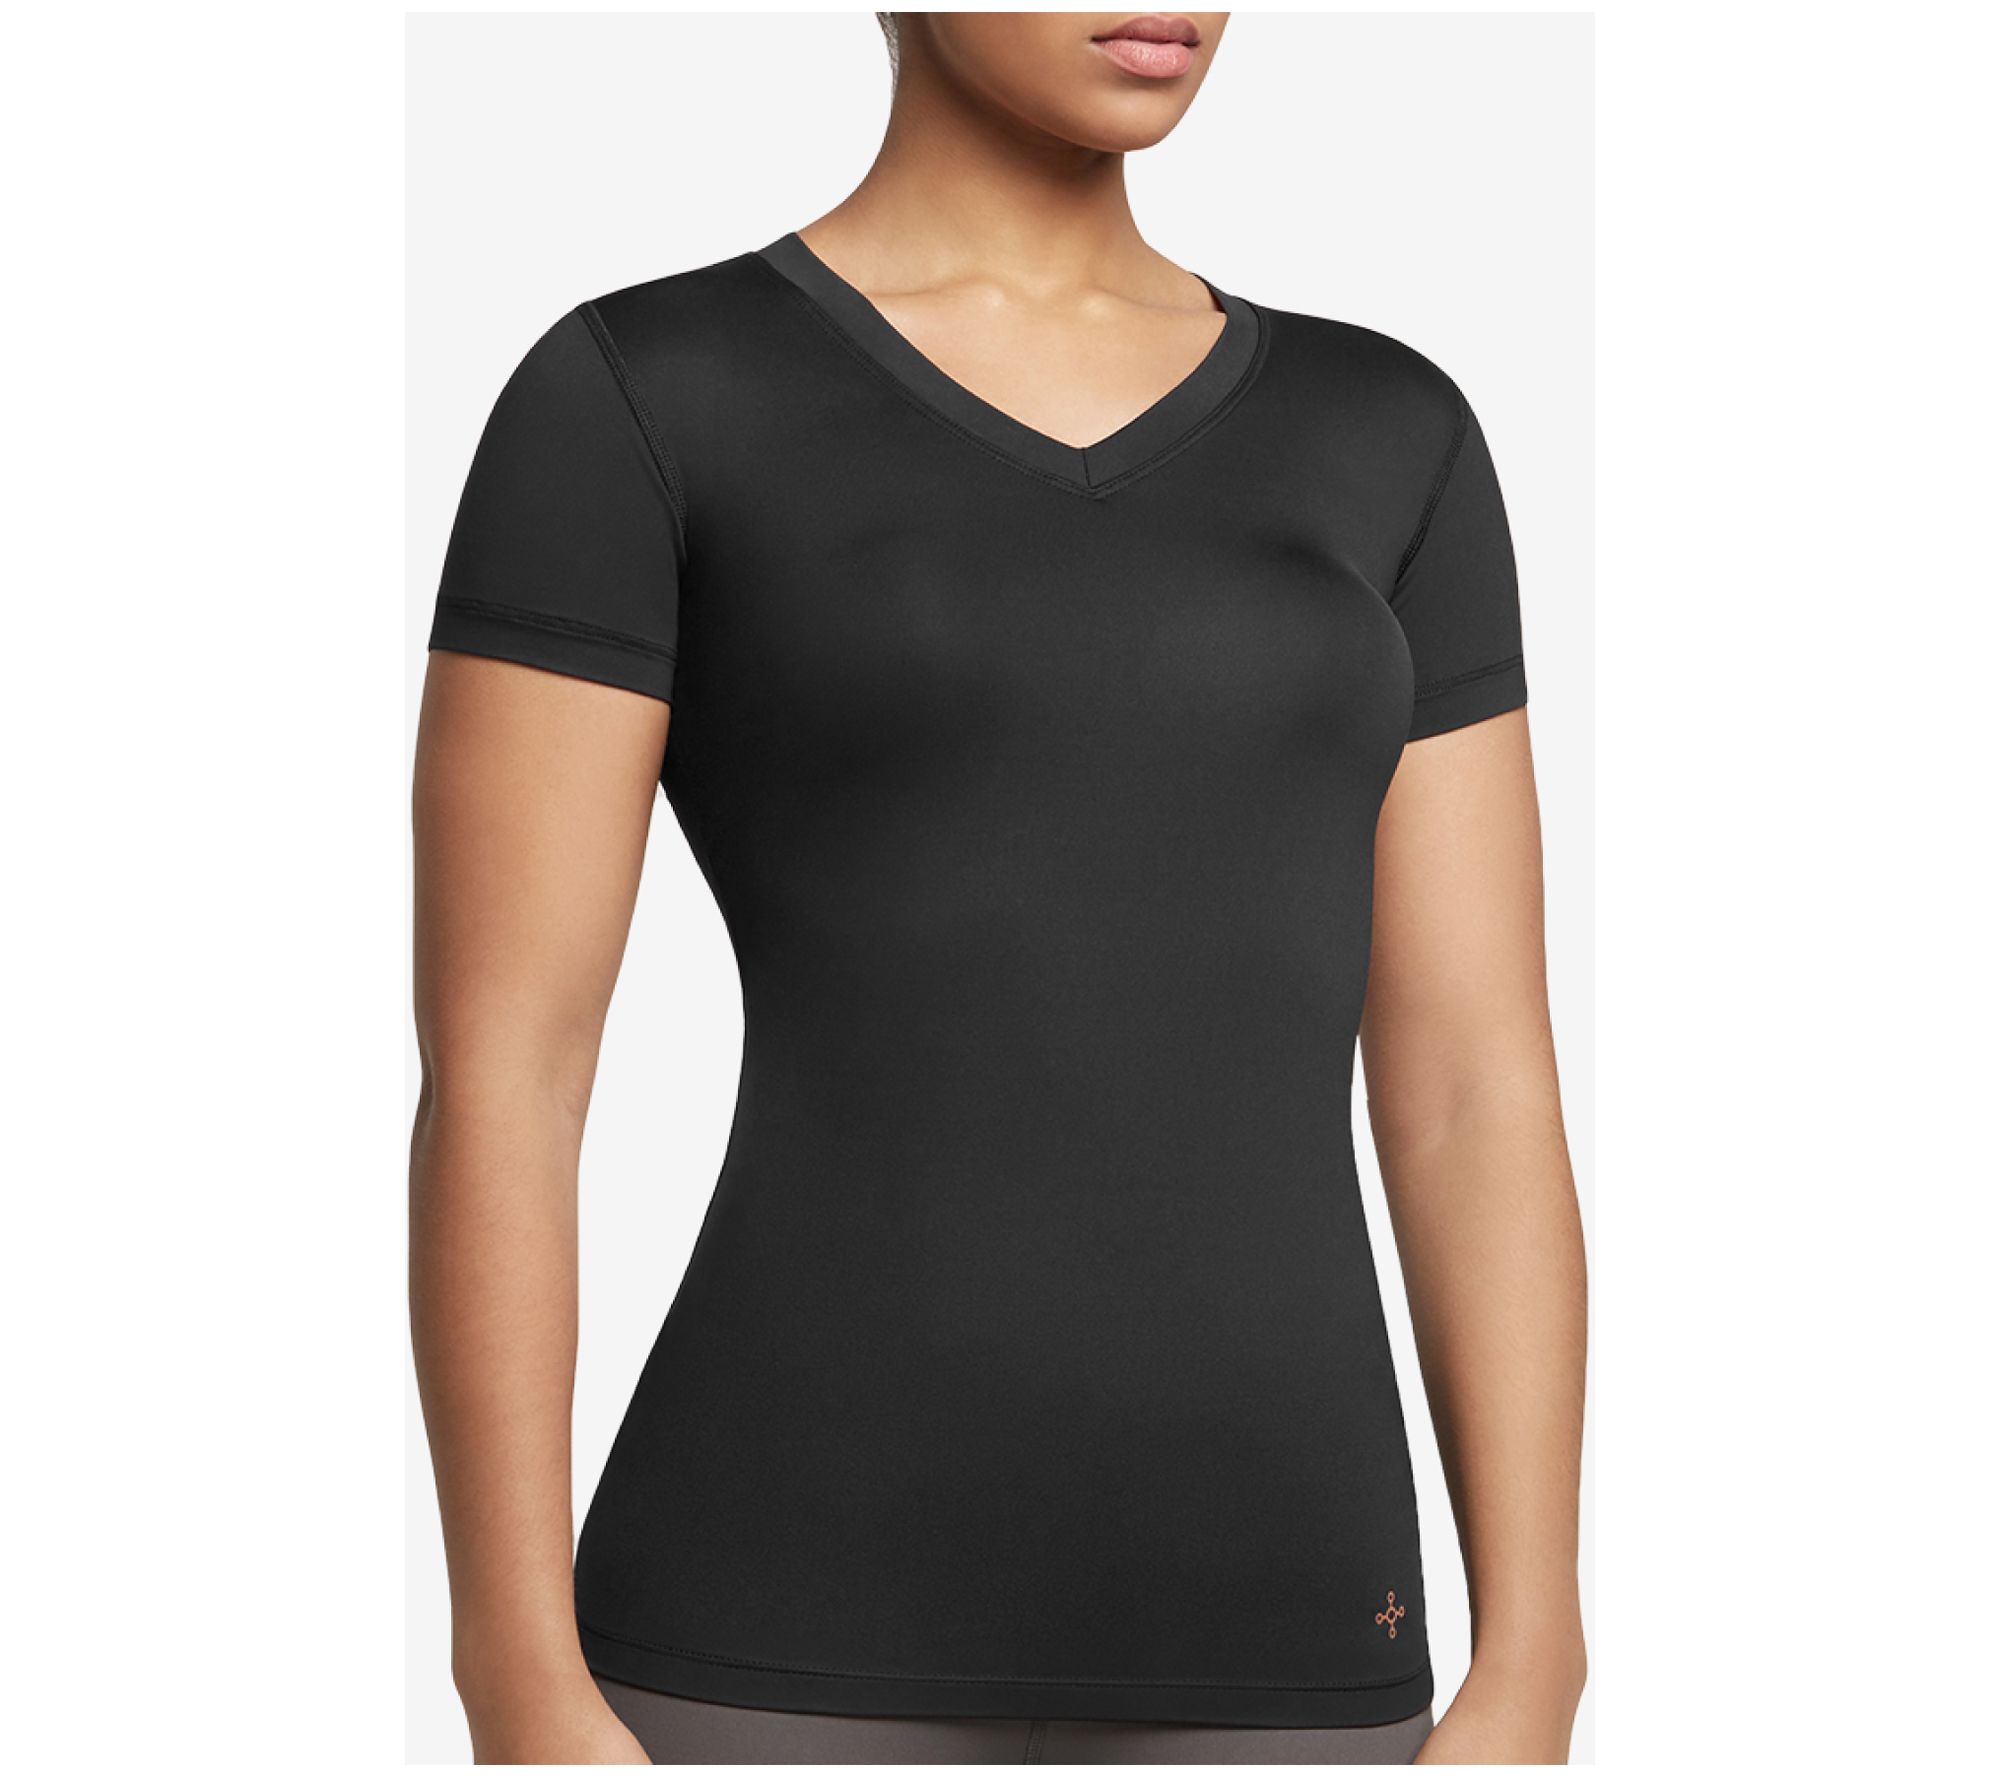 Tommie Copper Women's Short Sleeve CompressionV Neck Shirt 